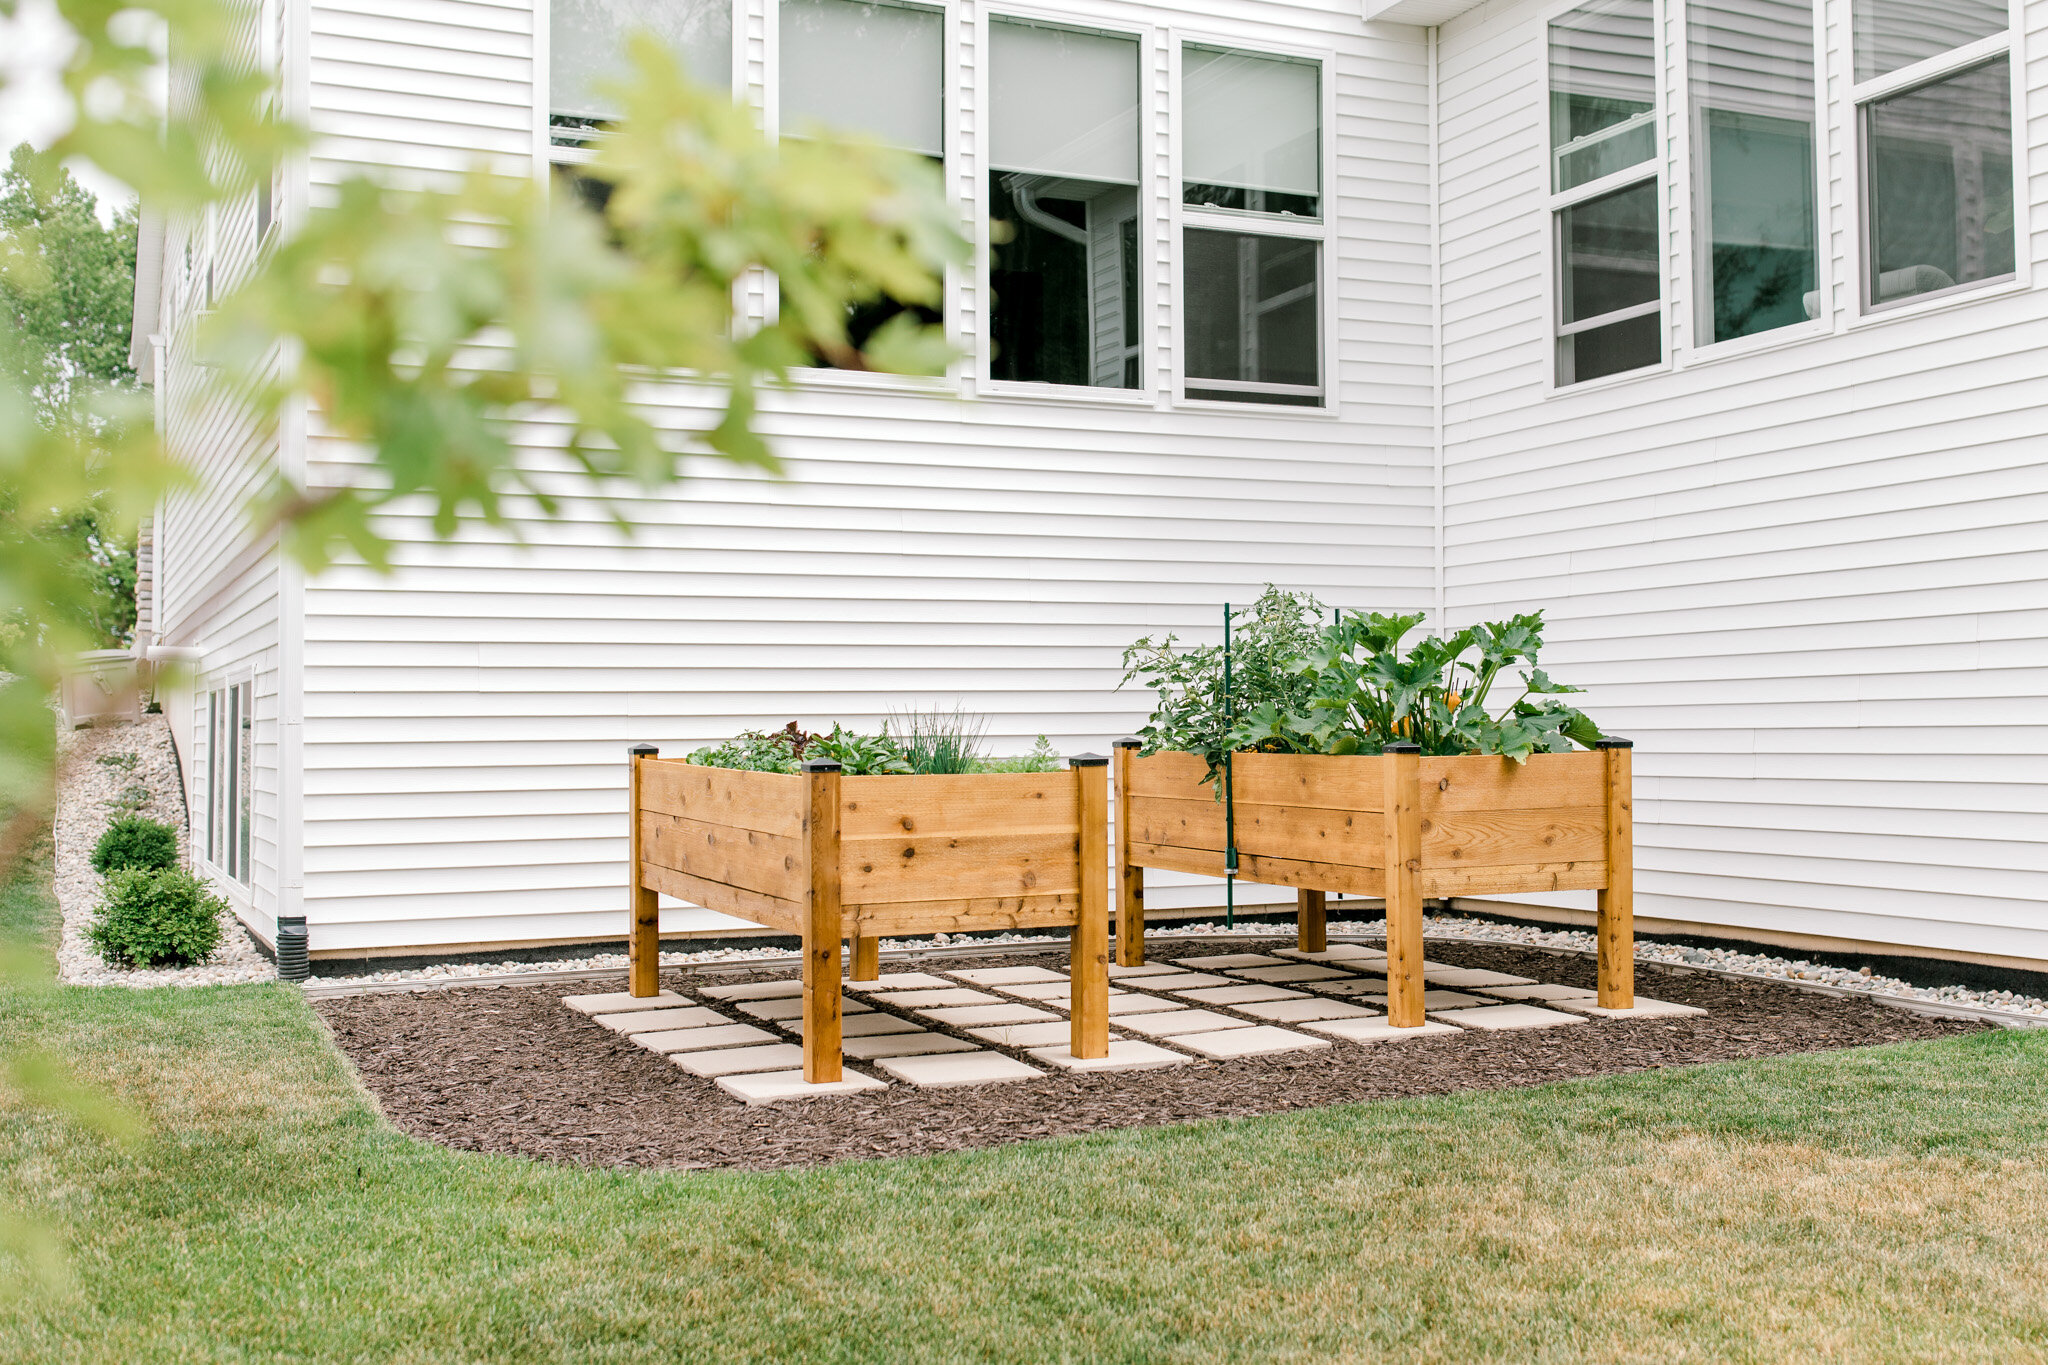 Raised organic veggie garden beds | Gardening in Michigan | Herb and Vegetable Garden